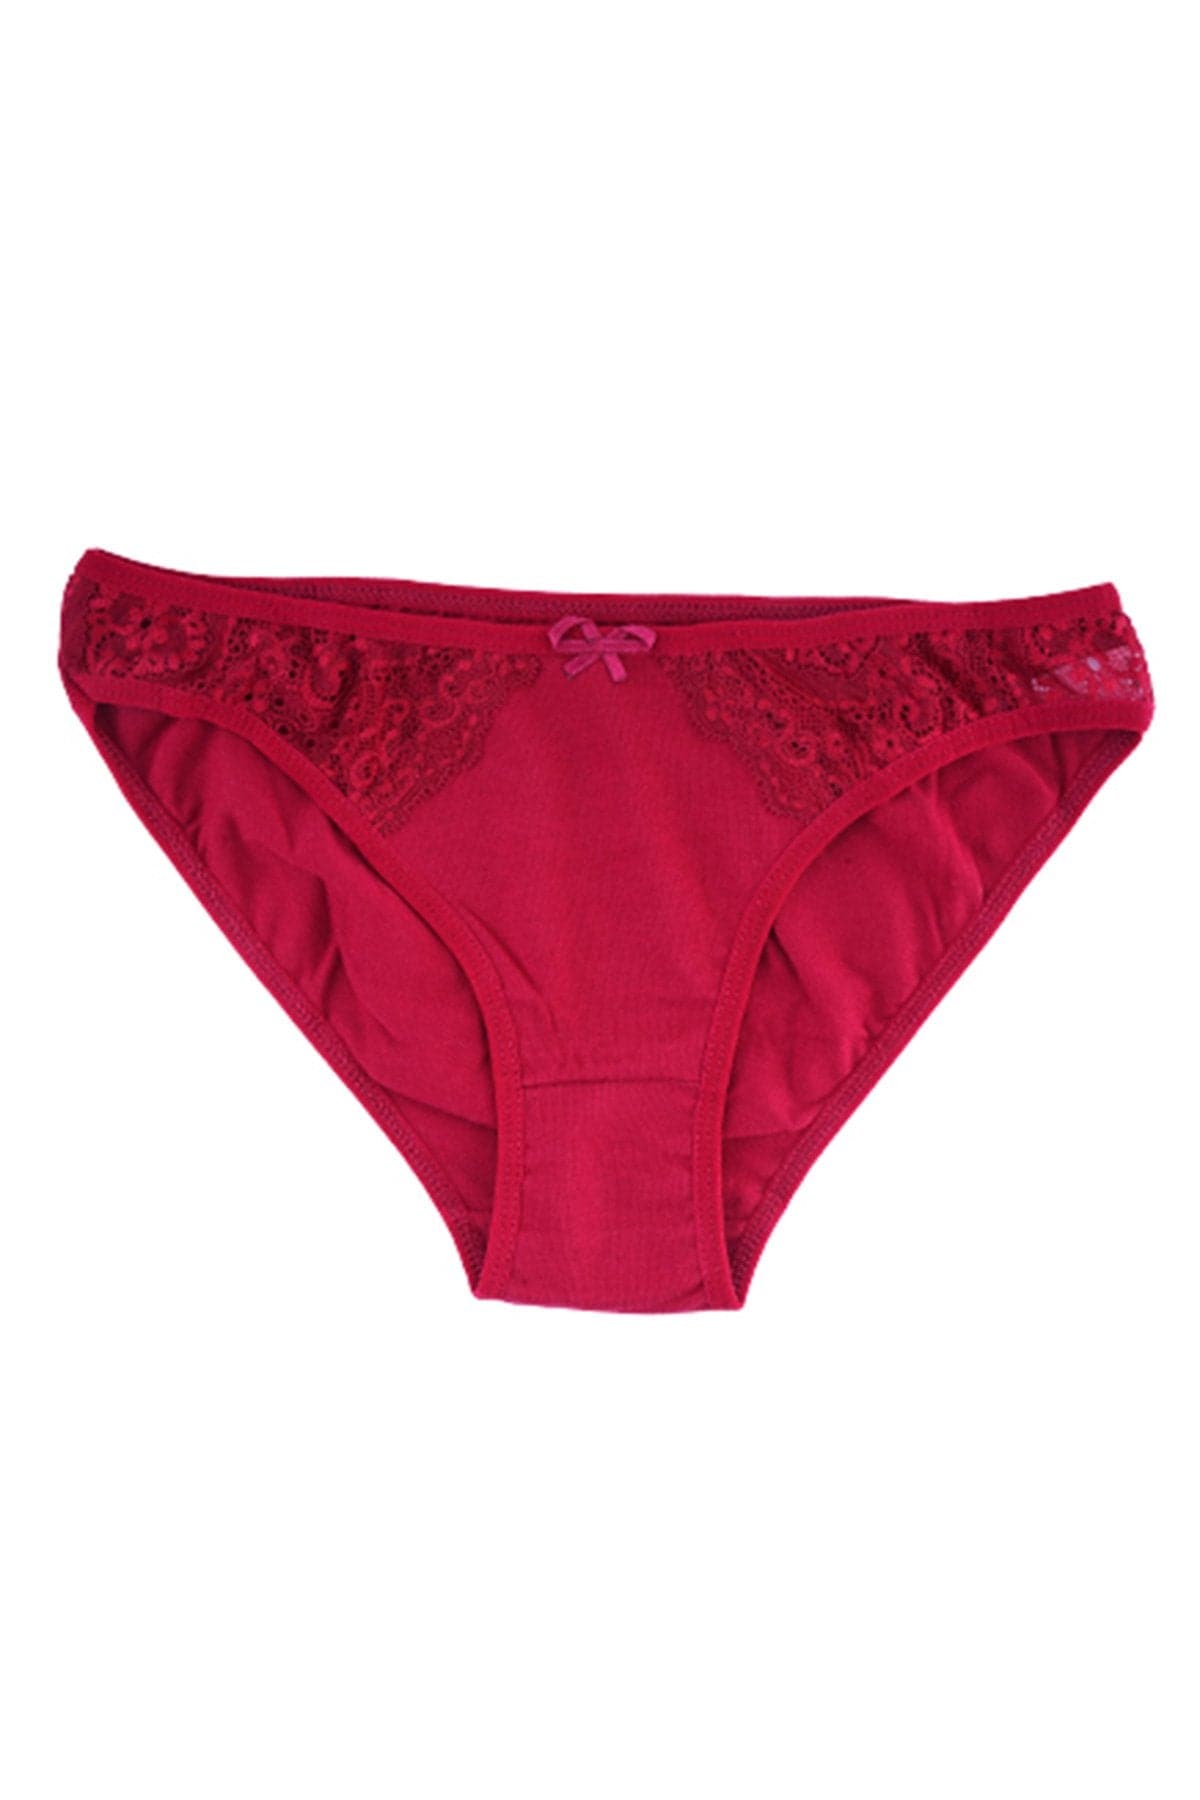 British Lingerie Studio Poppy Cotton Panty - Bordo - Premium Panties from BLS - Just Rs 800! Shop now at Cozmetica